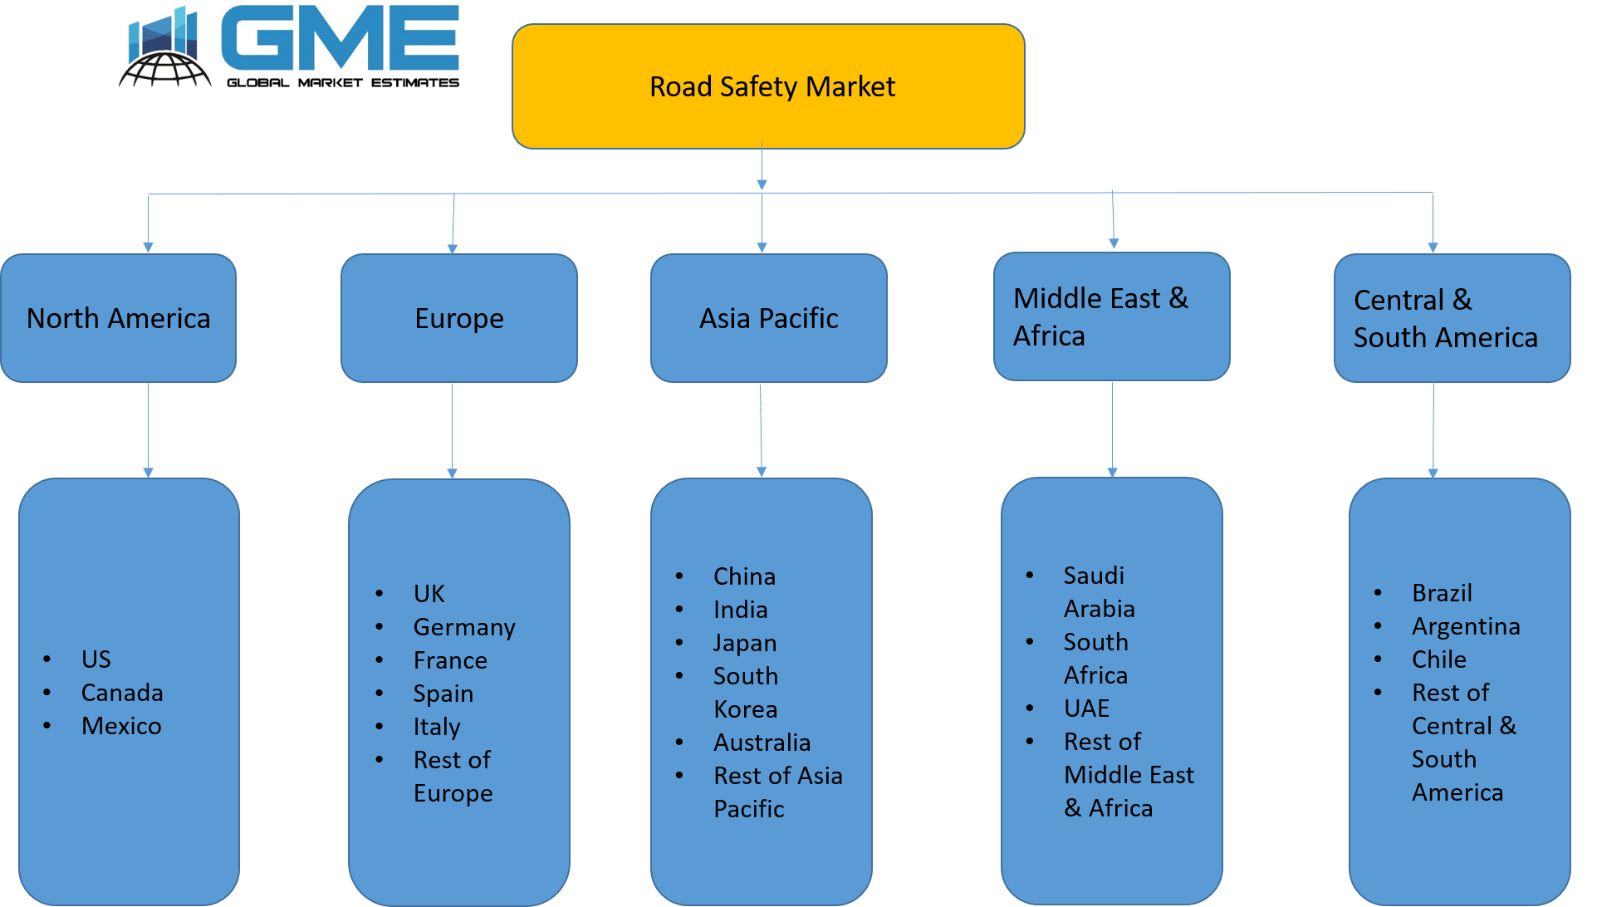 Road Safety Market Segmentation